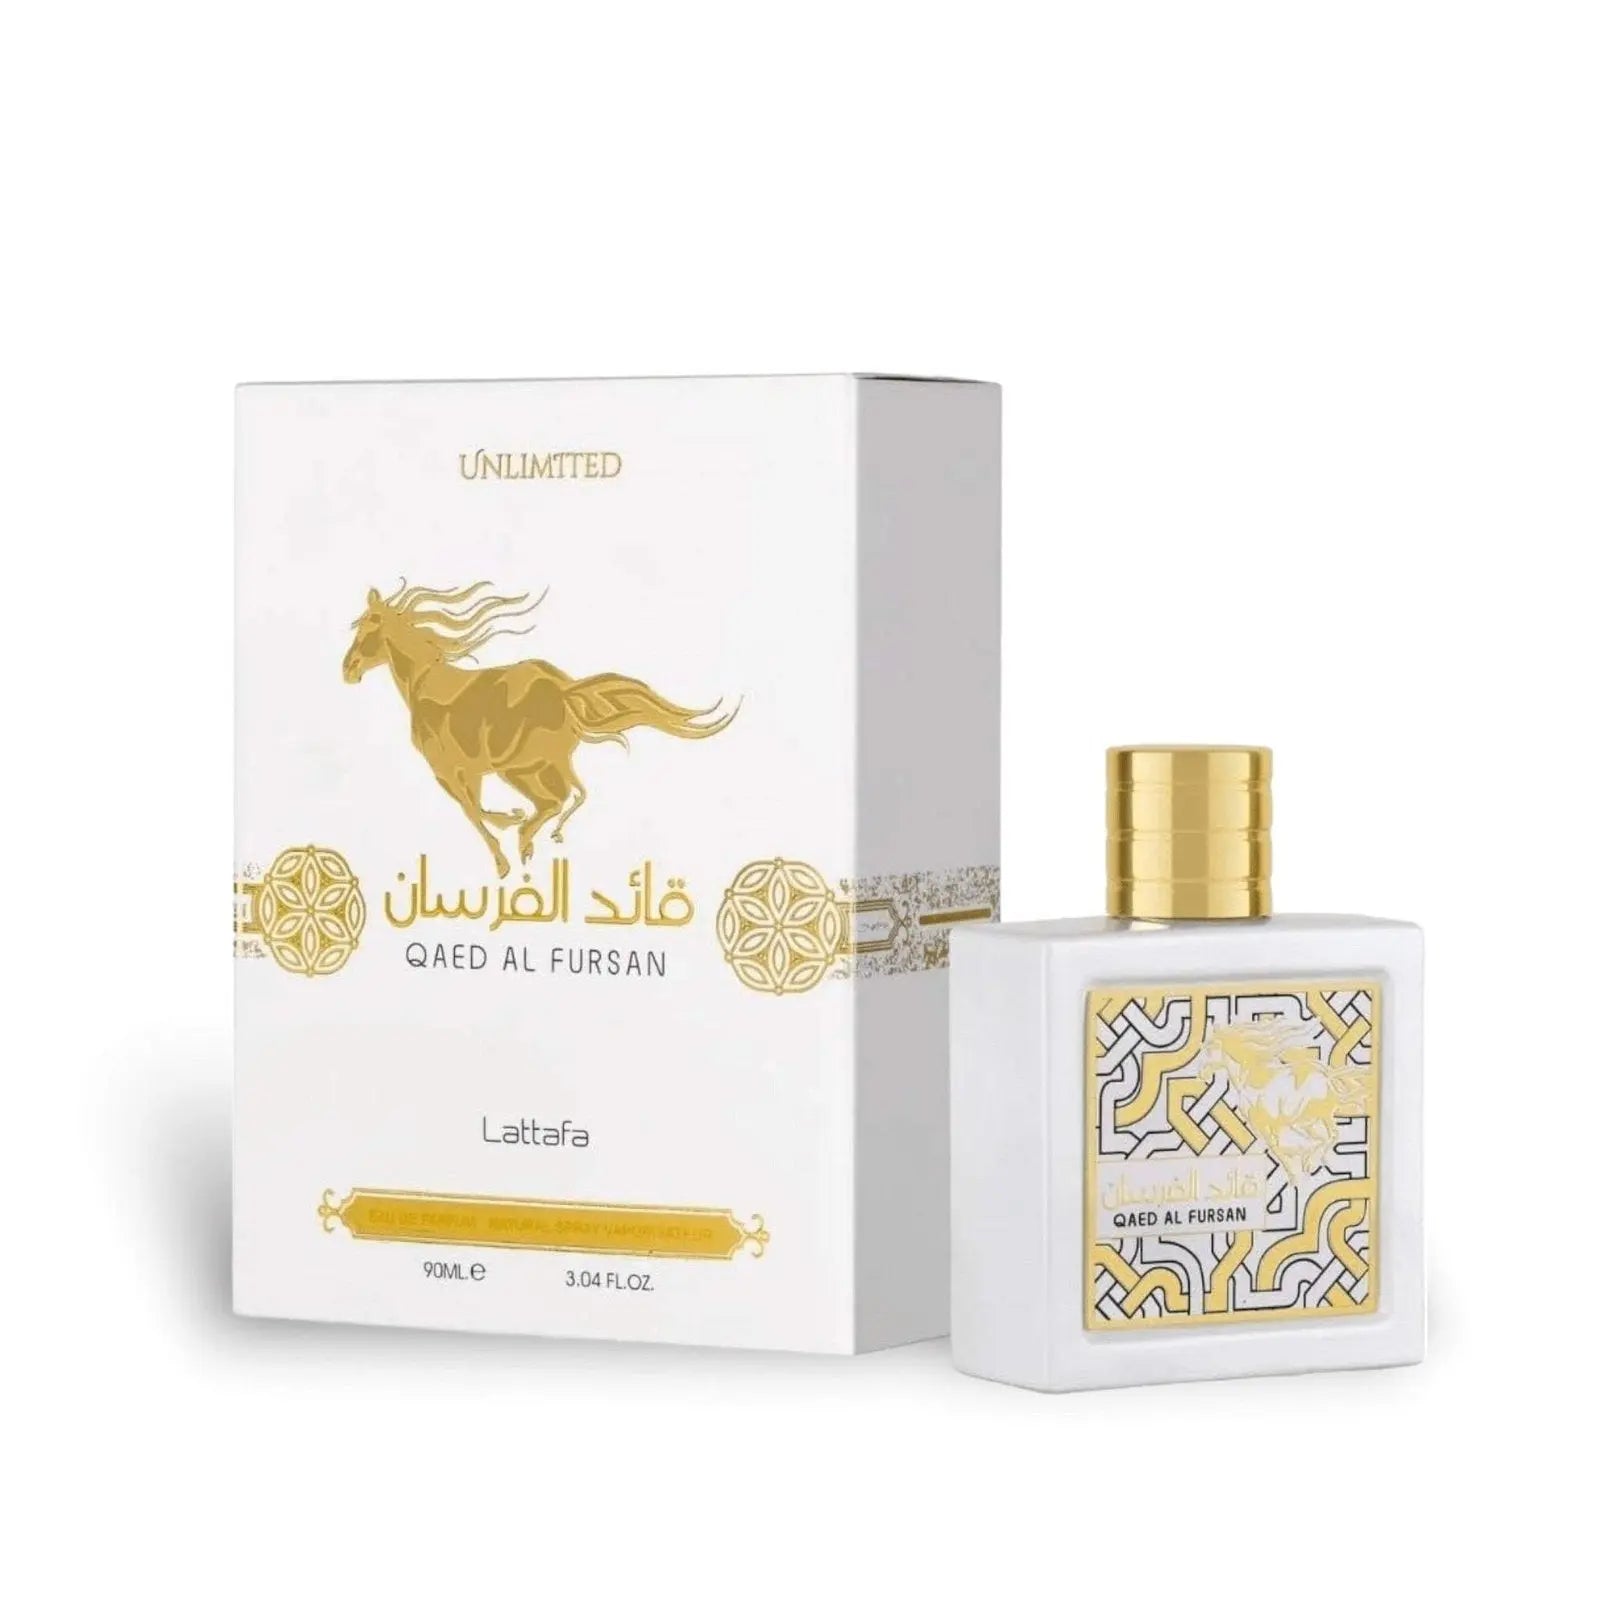 Qaaed Al Fursan Unlimited Perfume 90ml EDP Lattafa-Emirates Oud